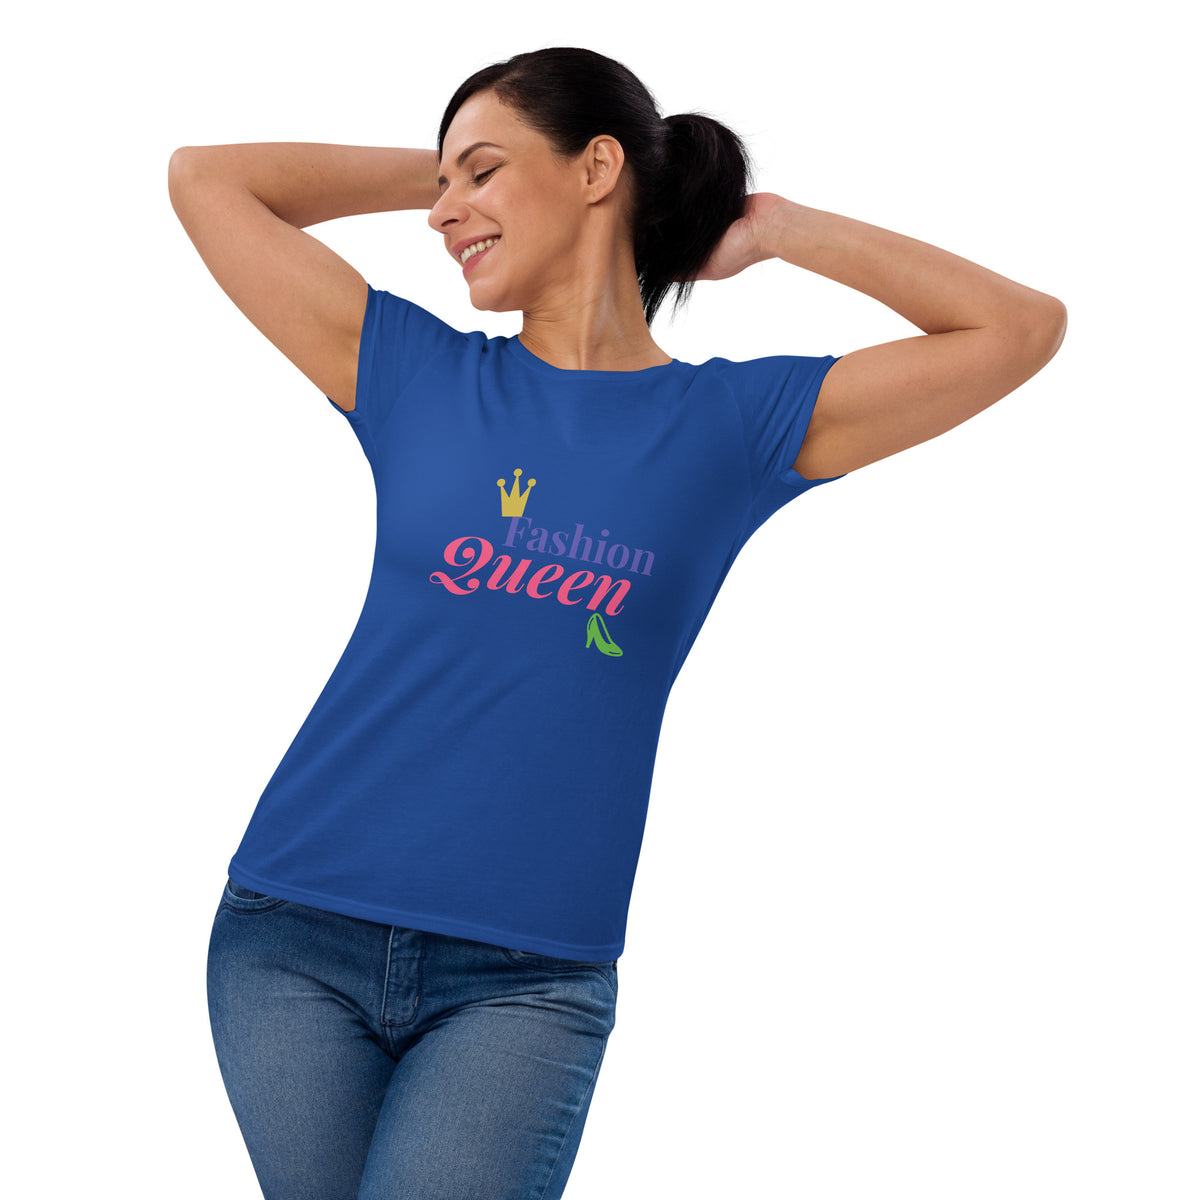 Fashion Queen Women's Short Sleeve T-Shirt